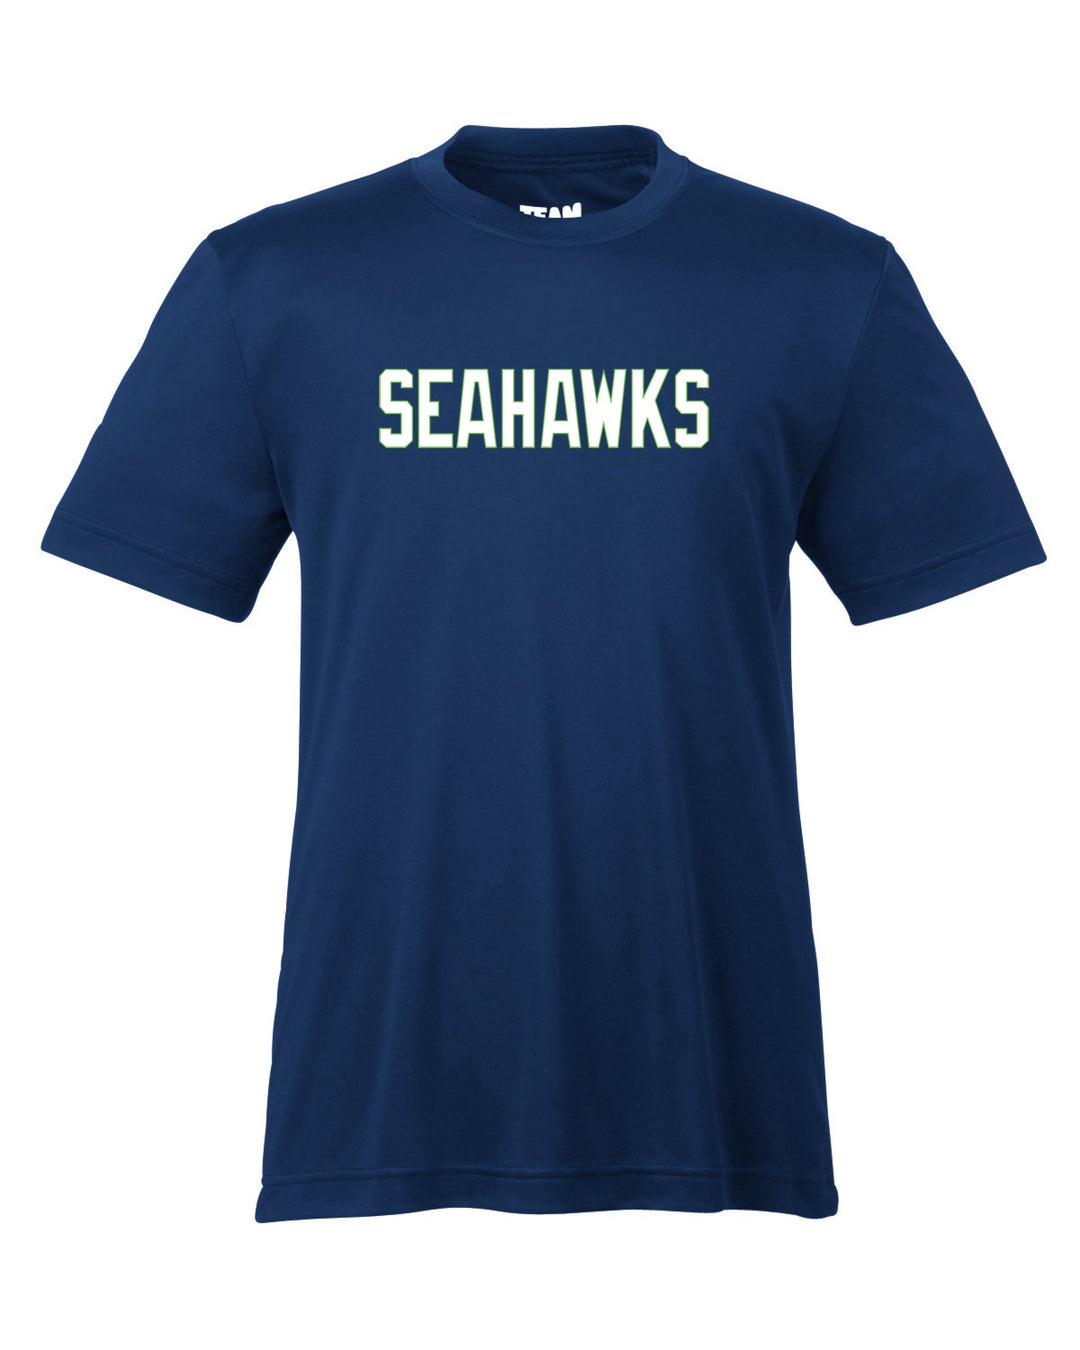 Flag Football Seahawks Team 365 Youth Zone Performance T-Shirt (TT11Y)